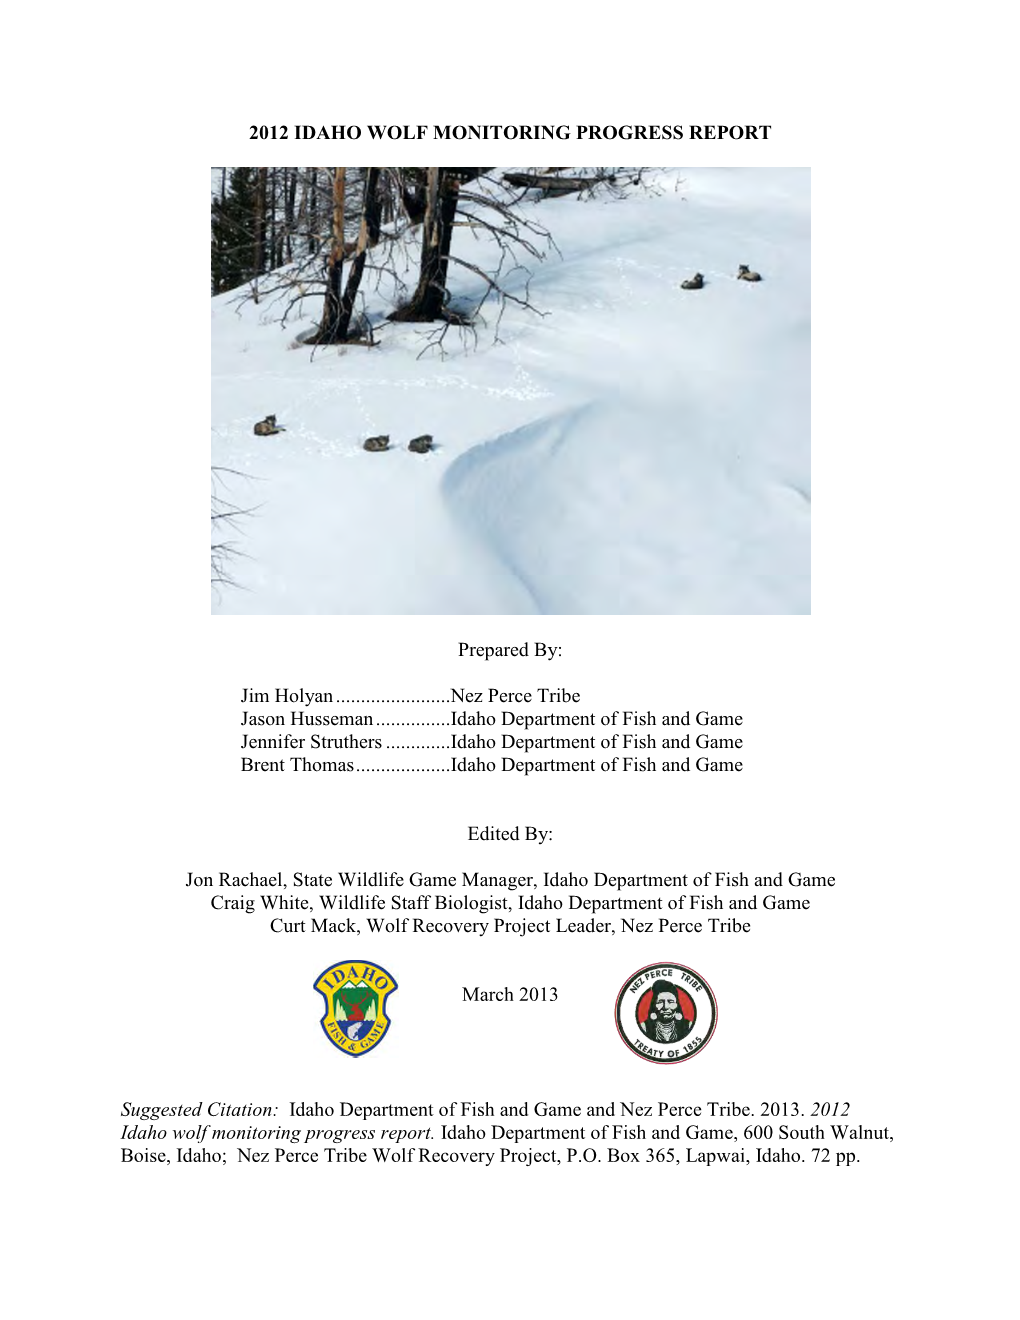 2012 Wolf Monitoring Progress Report